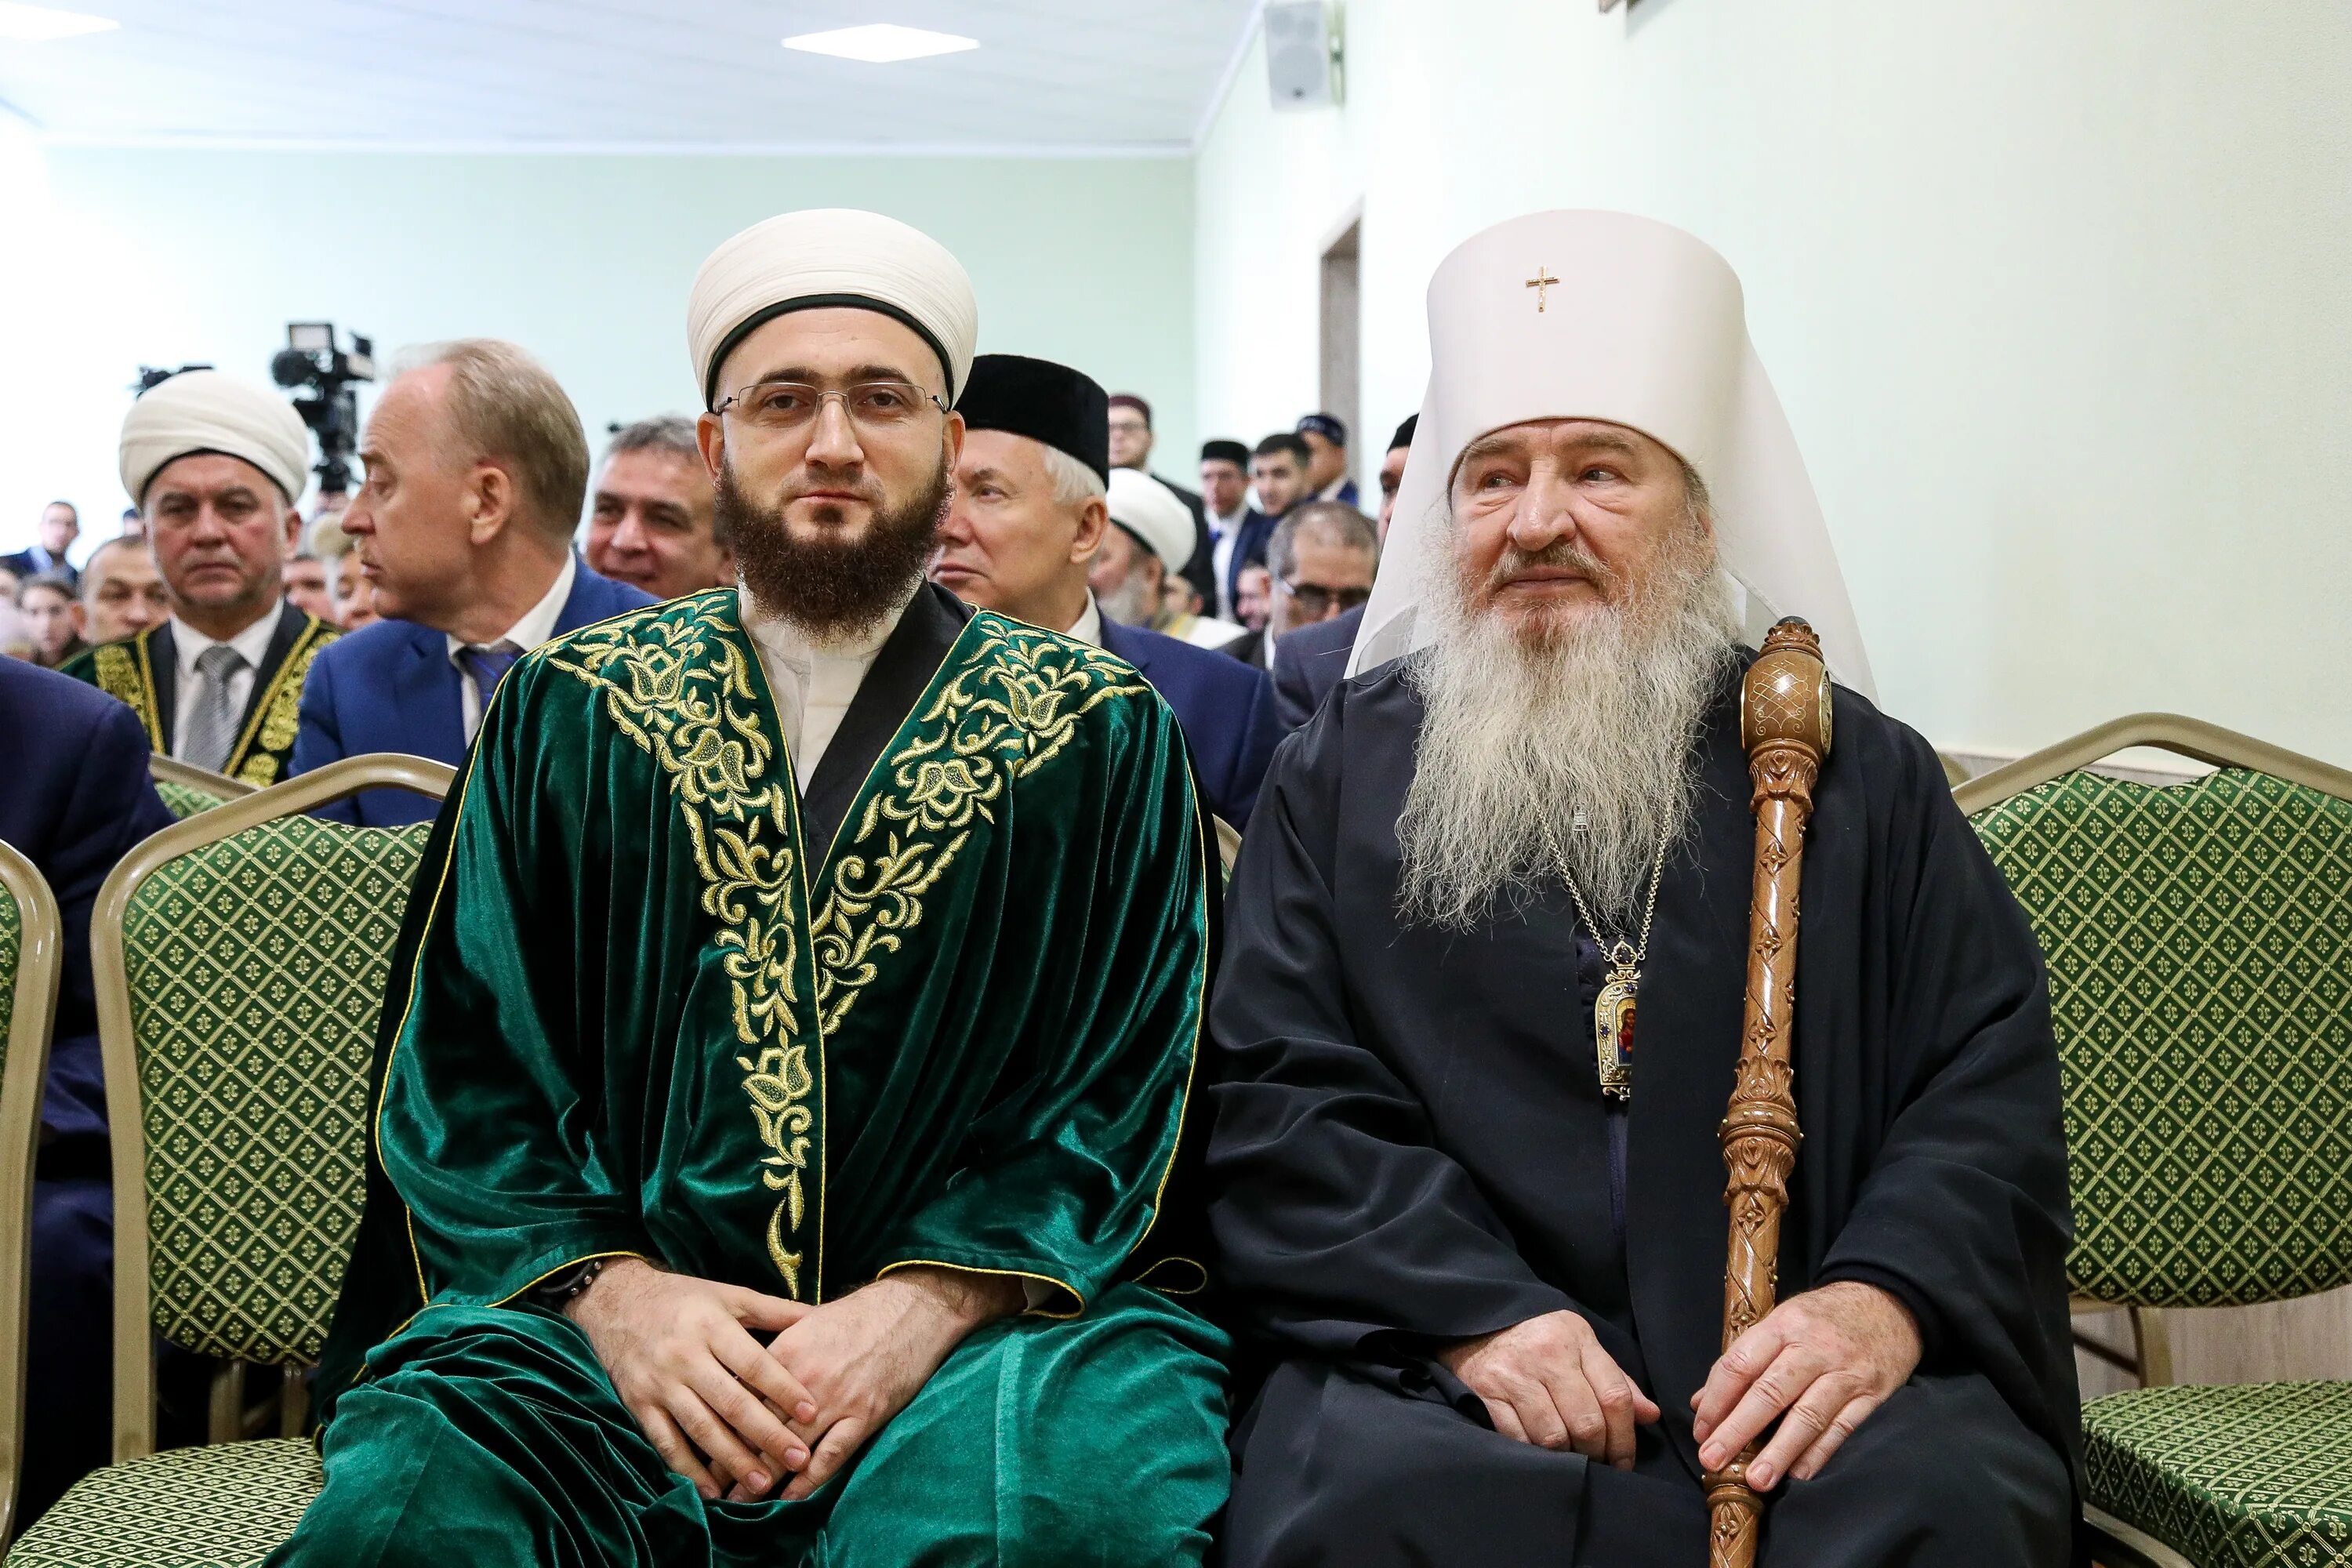 Жизнь мусульман в 19 веке в россии. Мусульманский флаг ЦДУМ. Мусульмане в России. Русские мусульмане.